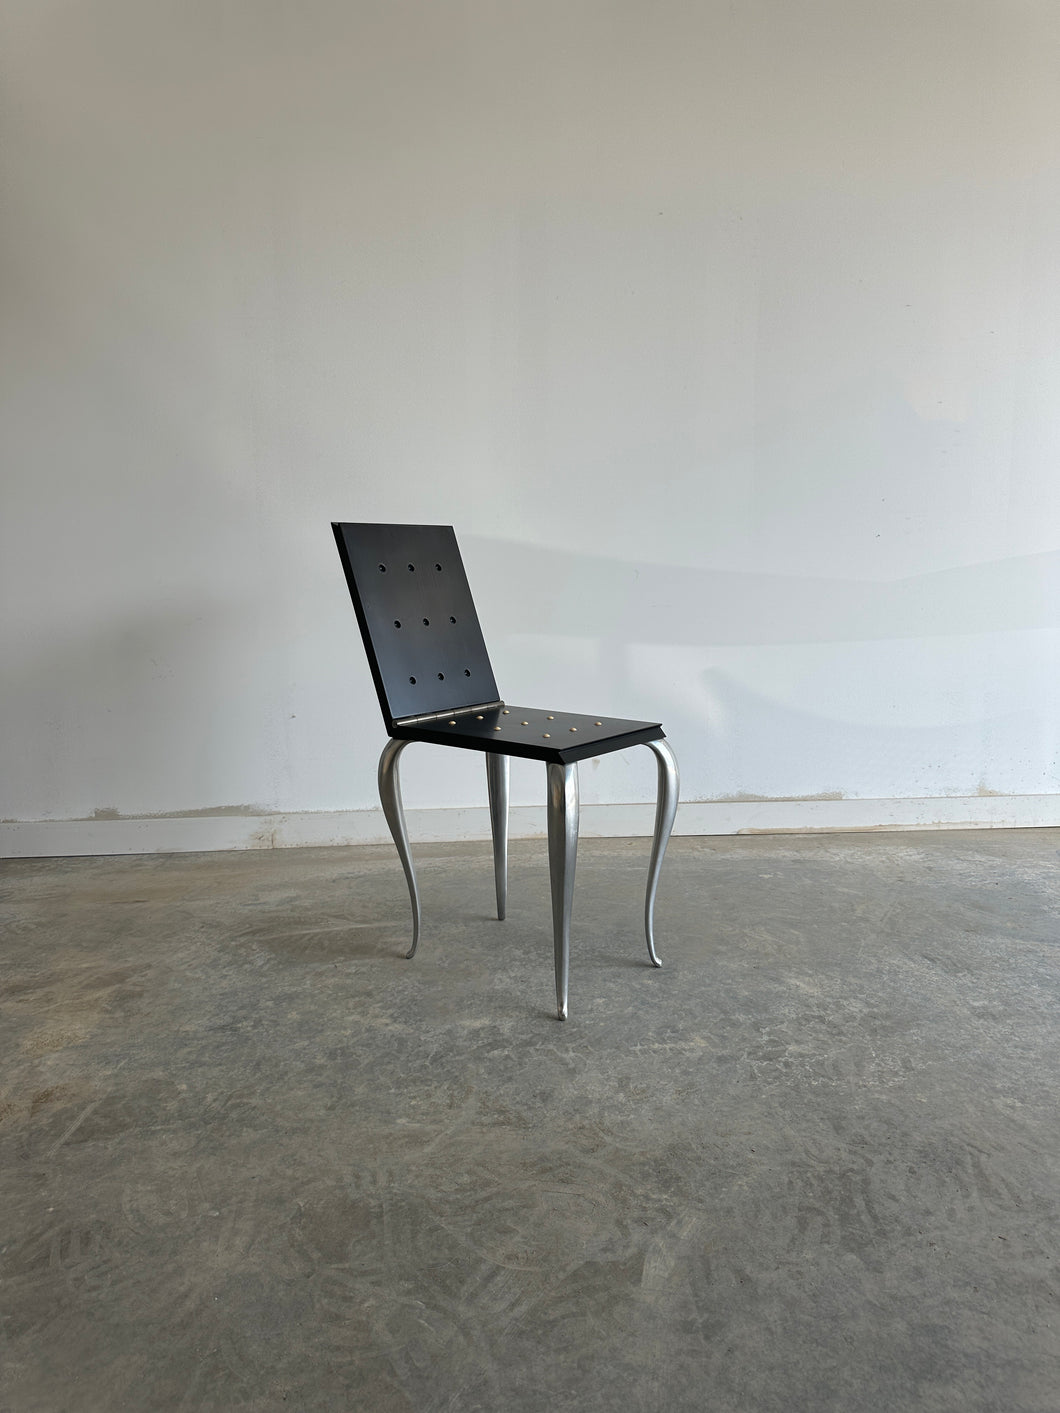 Lola Mundo folding chair by Philippe Starck